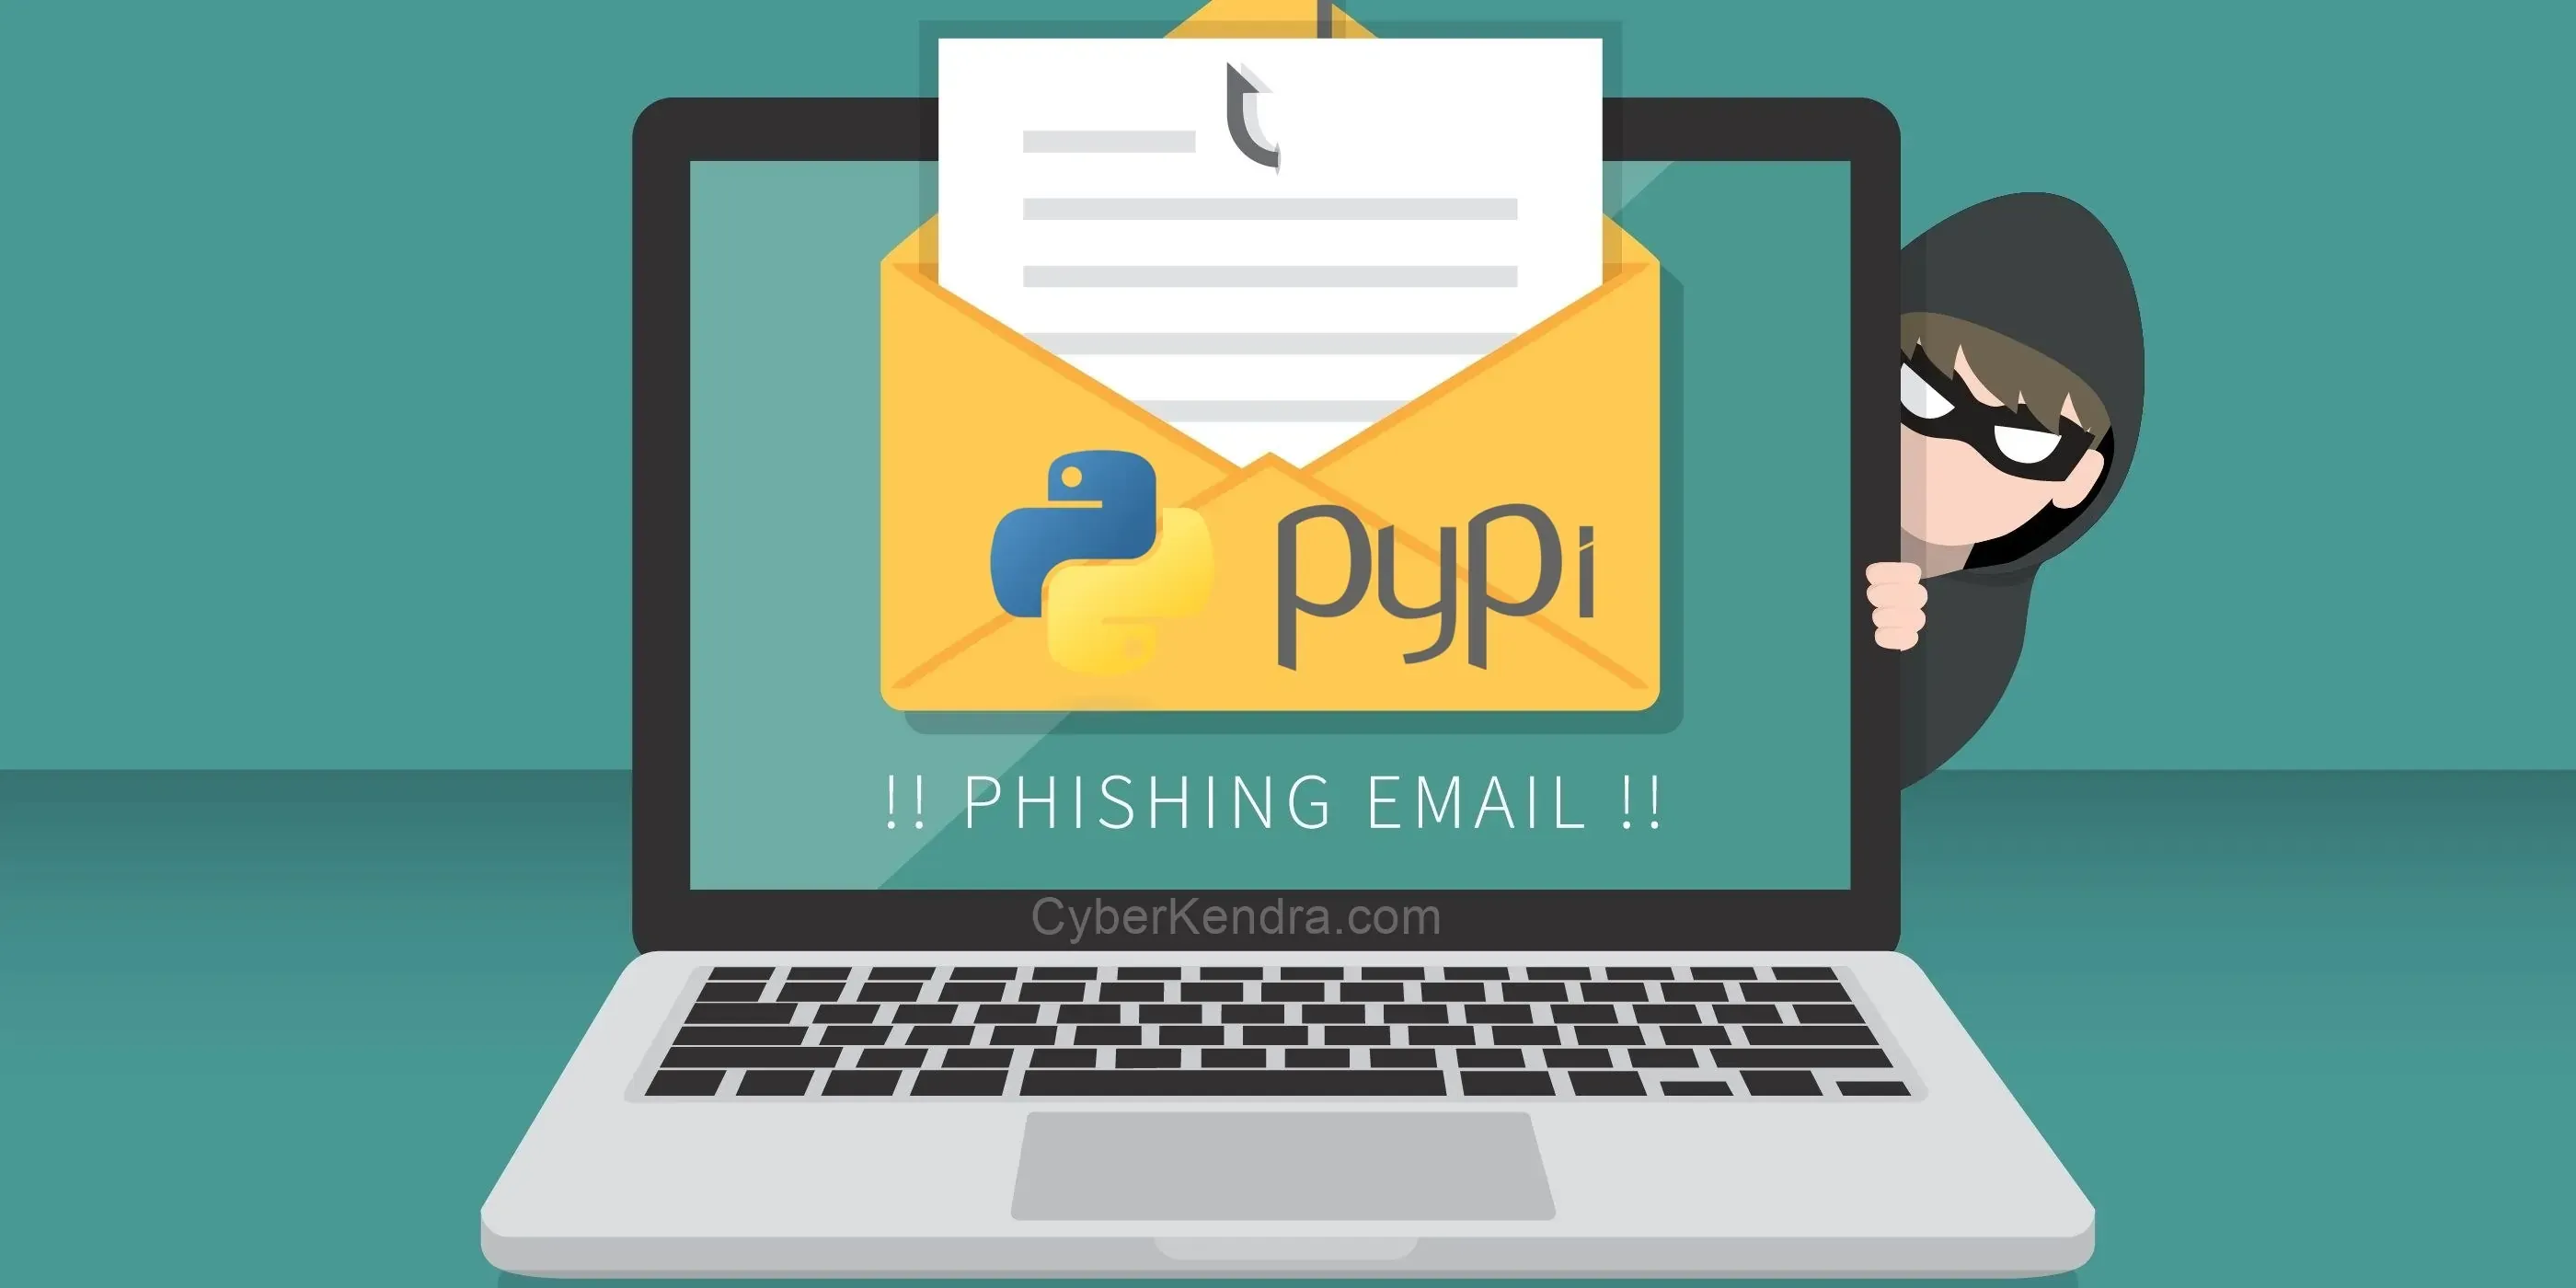 PyPI Phishing campaign